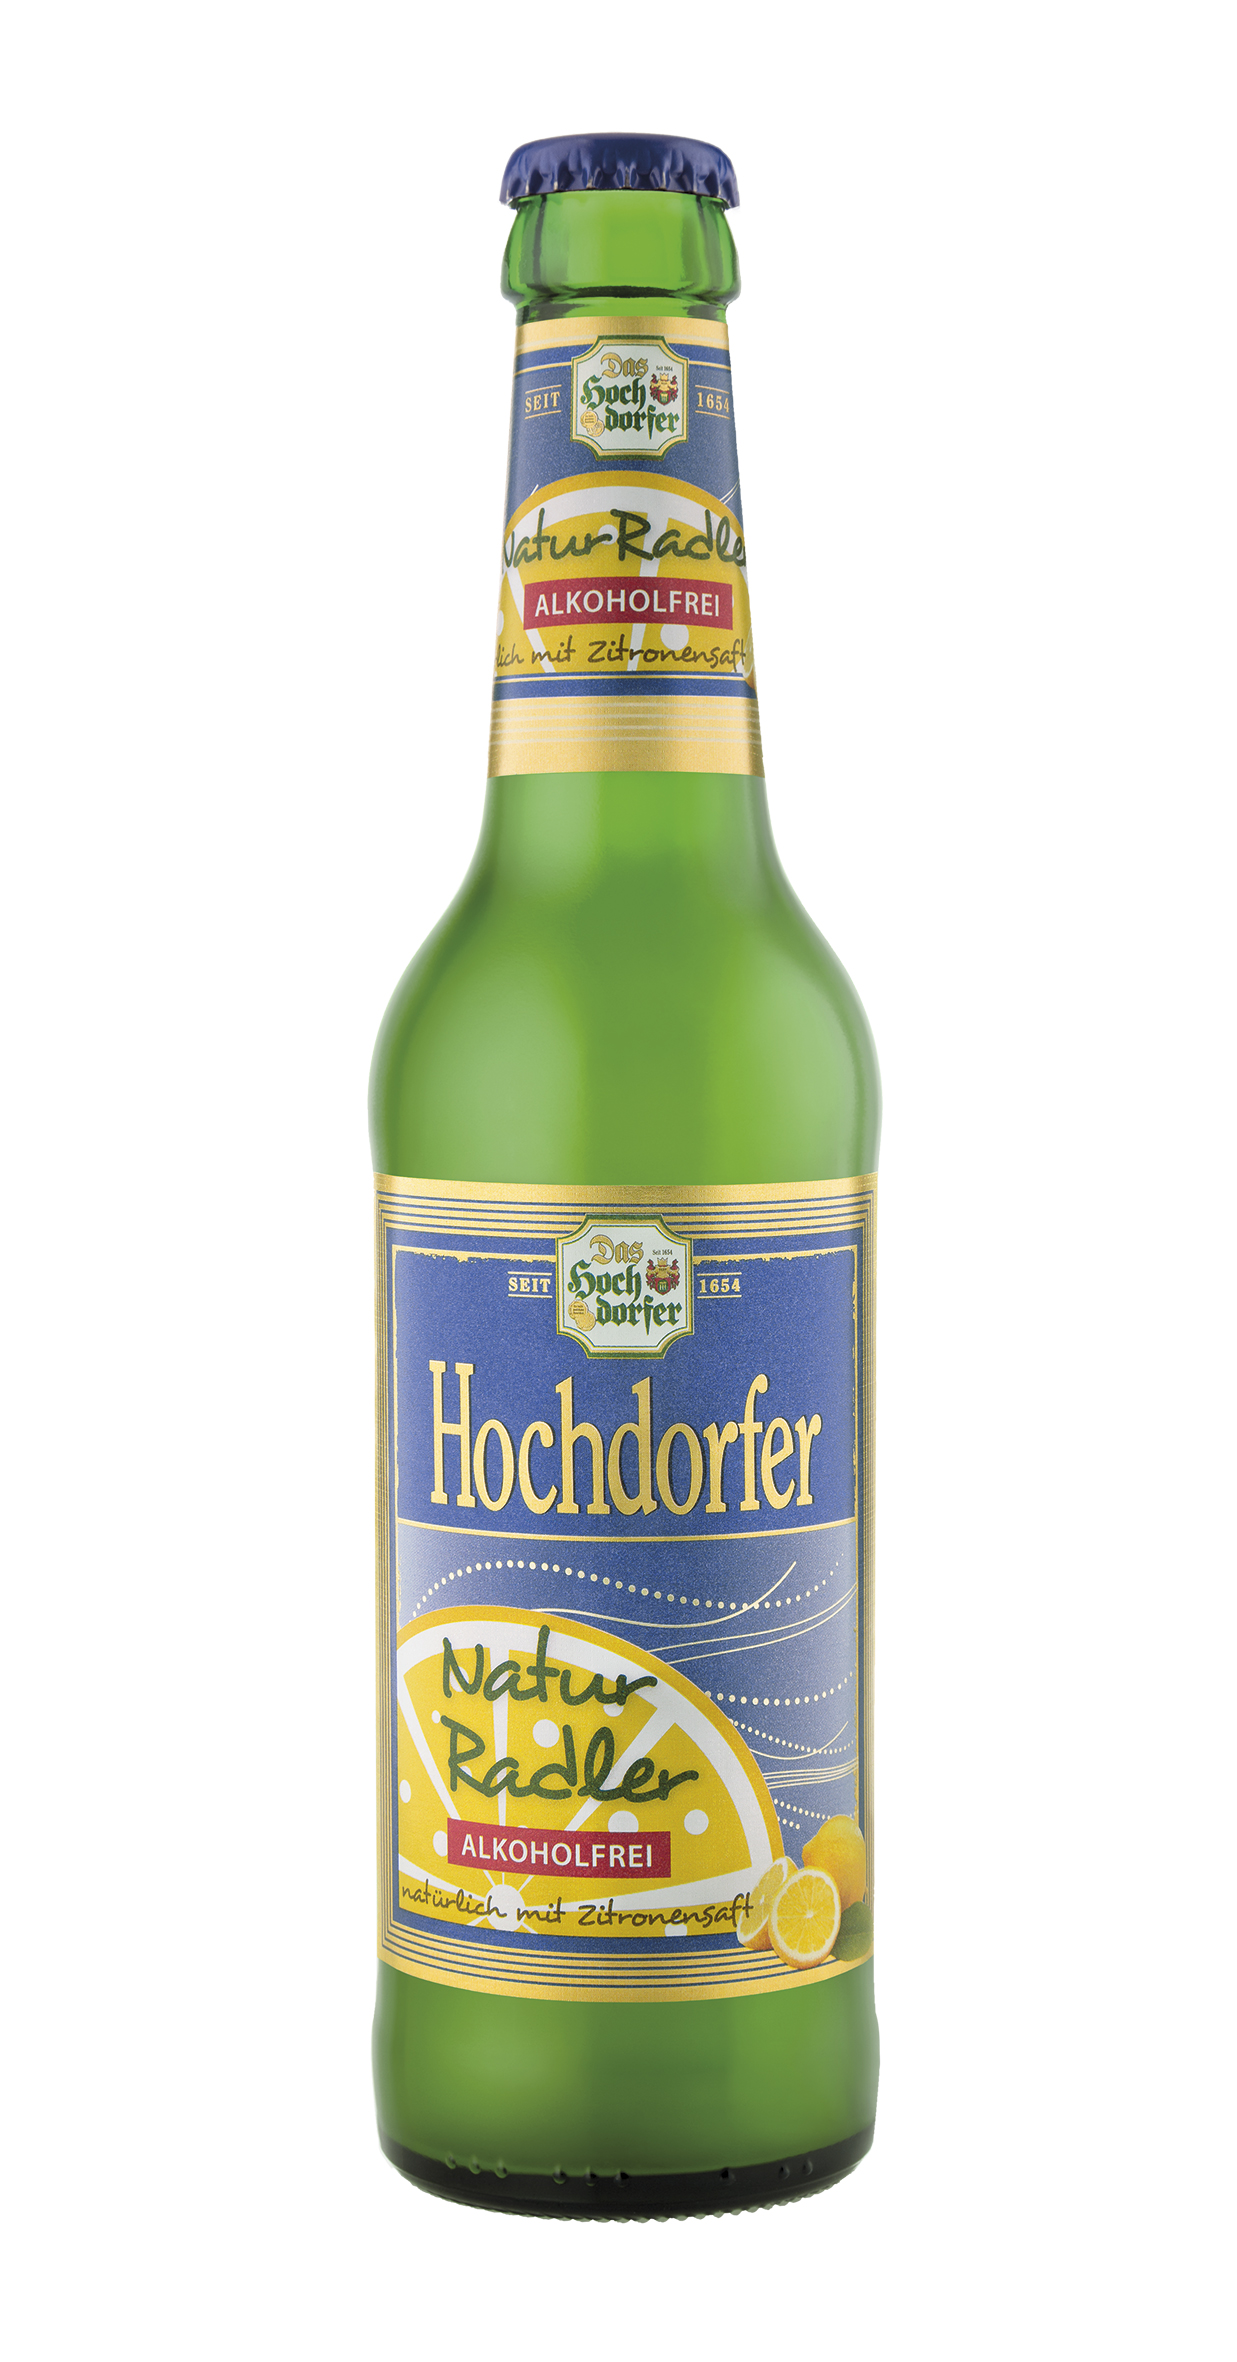 Hochdorfer NaturRadler Alkoholfrei